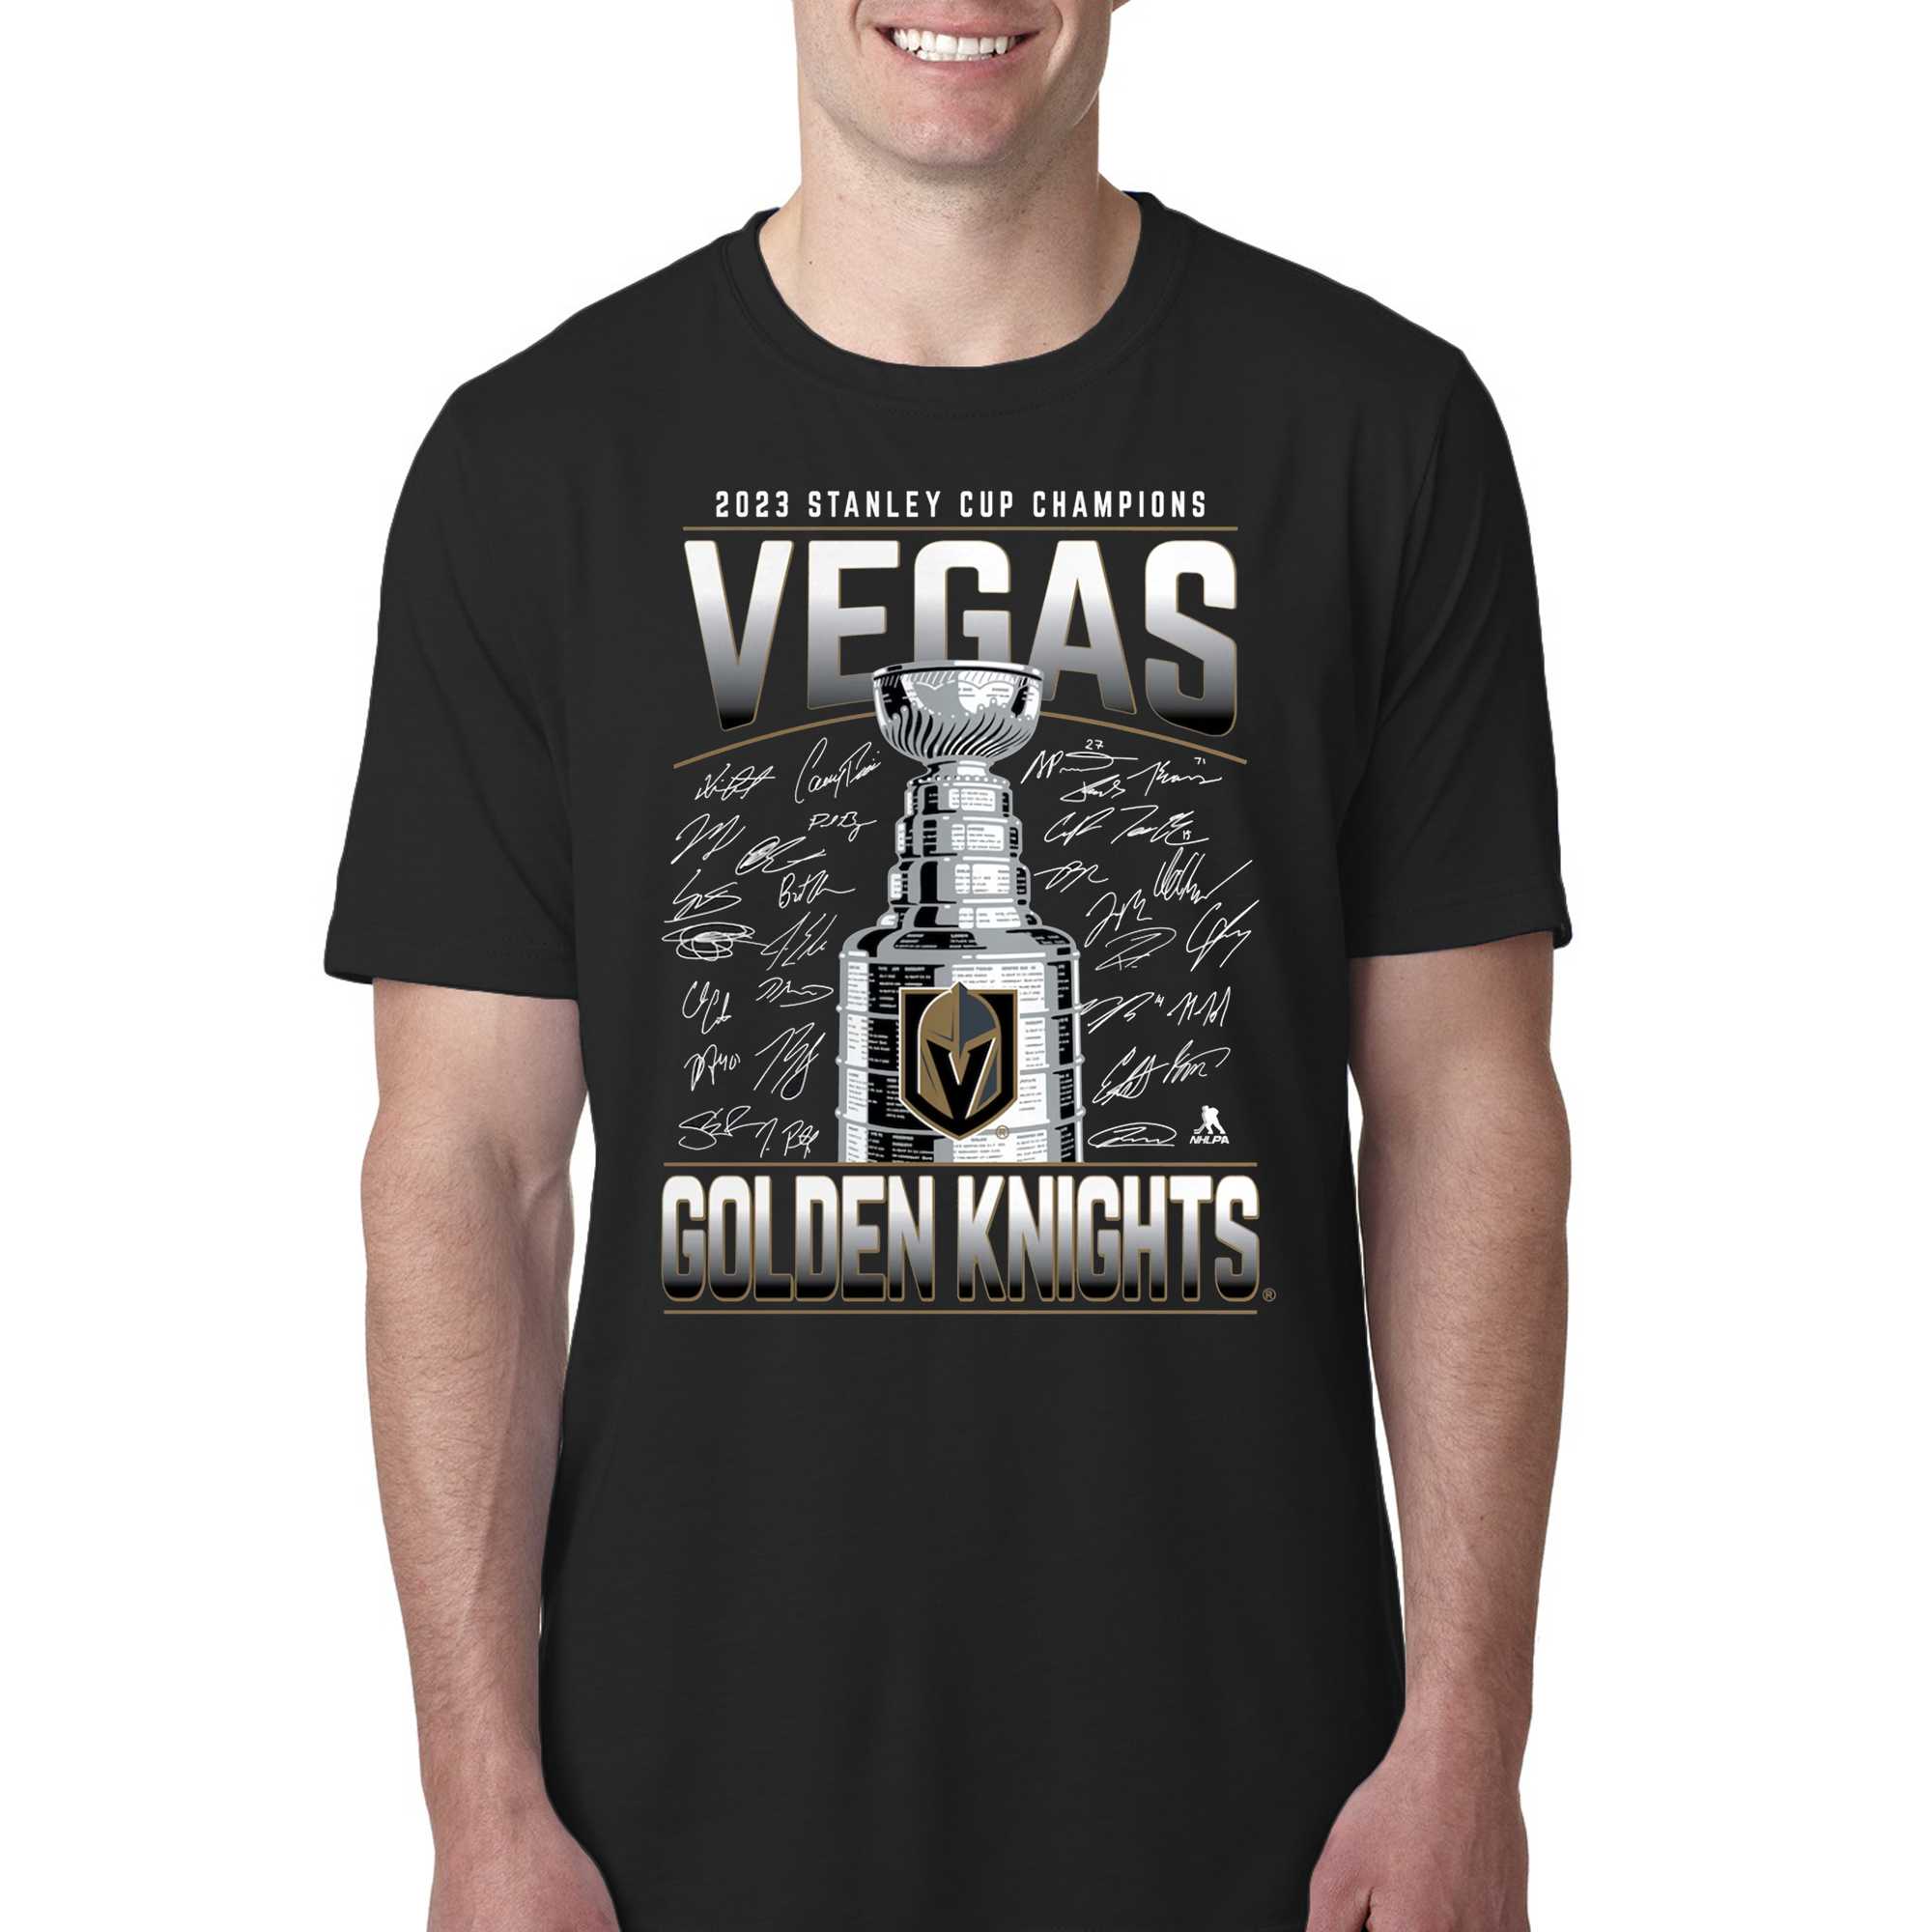 http://shibtee.com/wp-content/uploads/2023/06/2023-stanley-cup-champions-vegas-golden-knights-signature-t-shirt-1.jpg